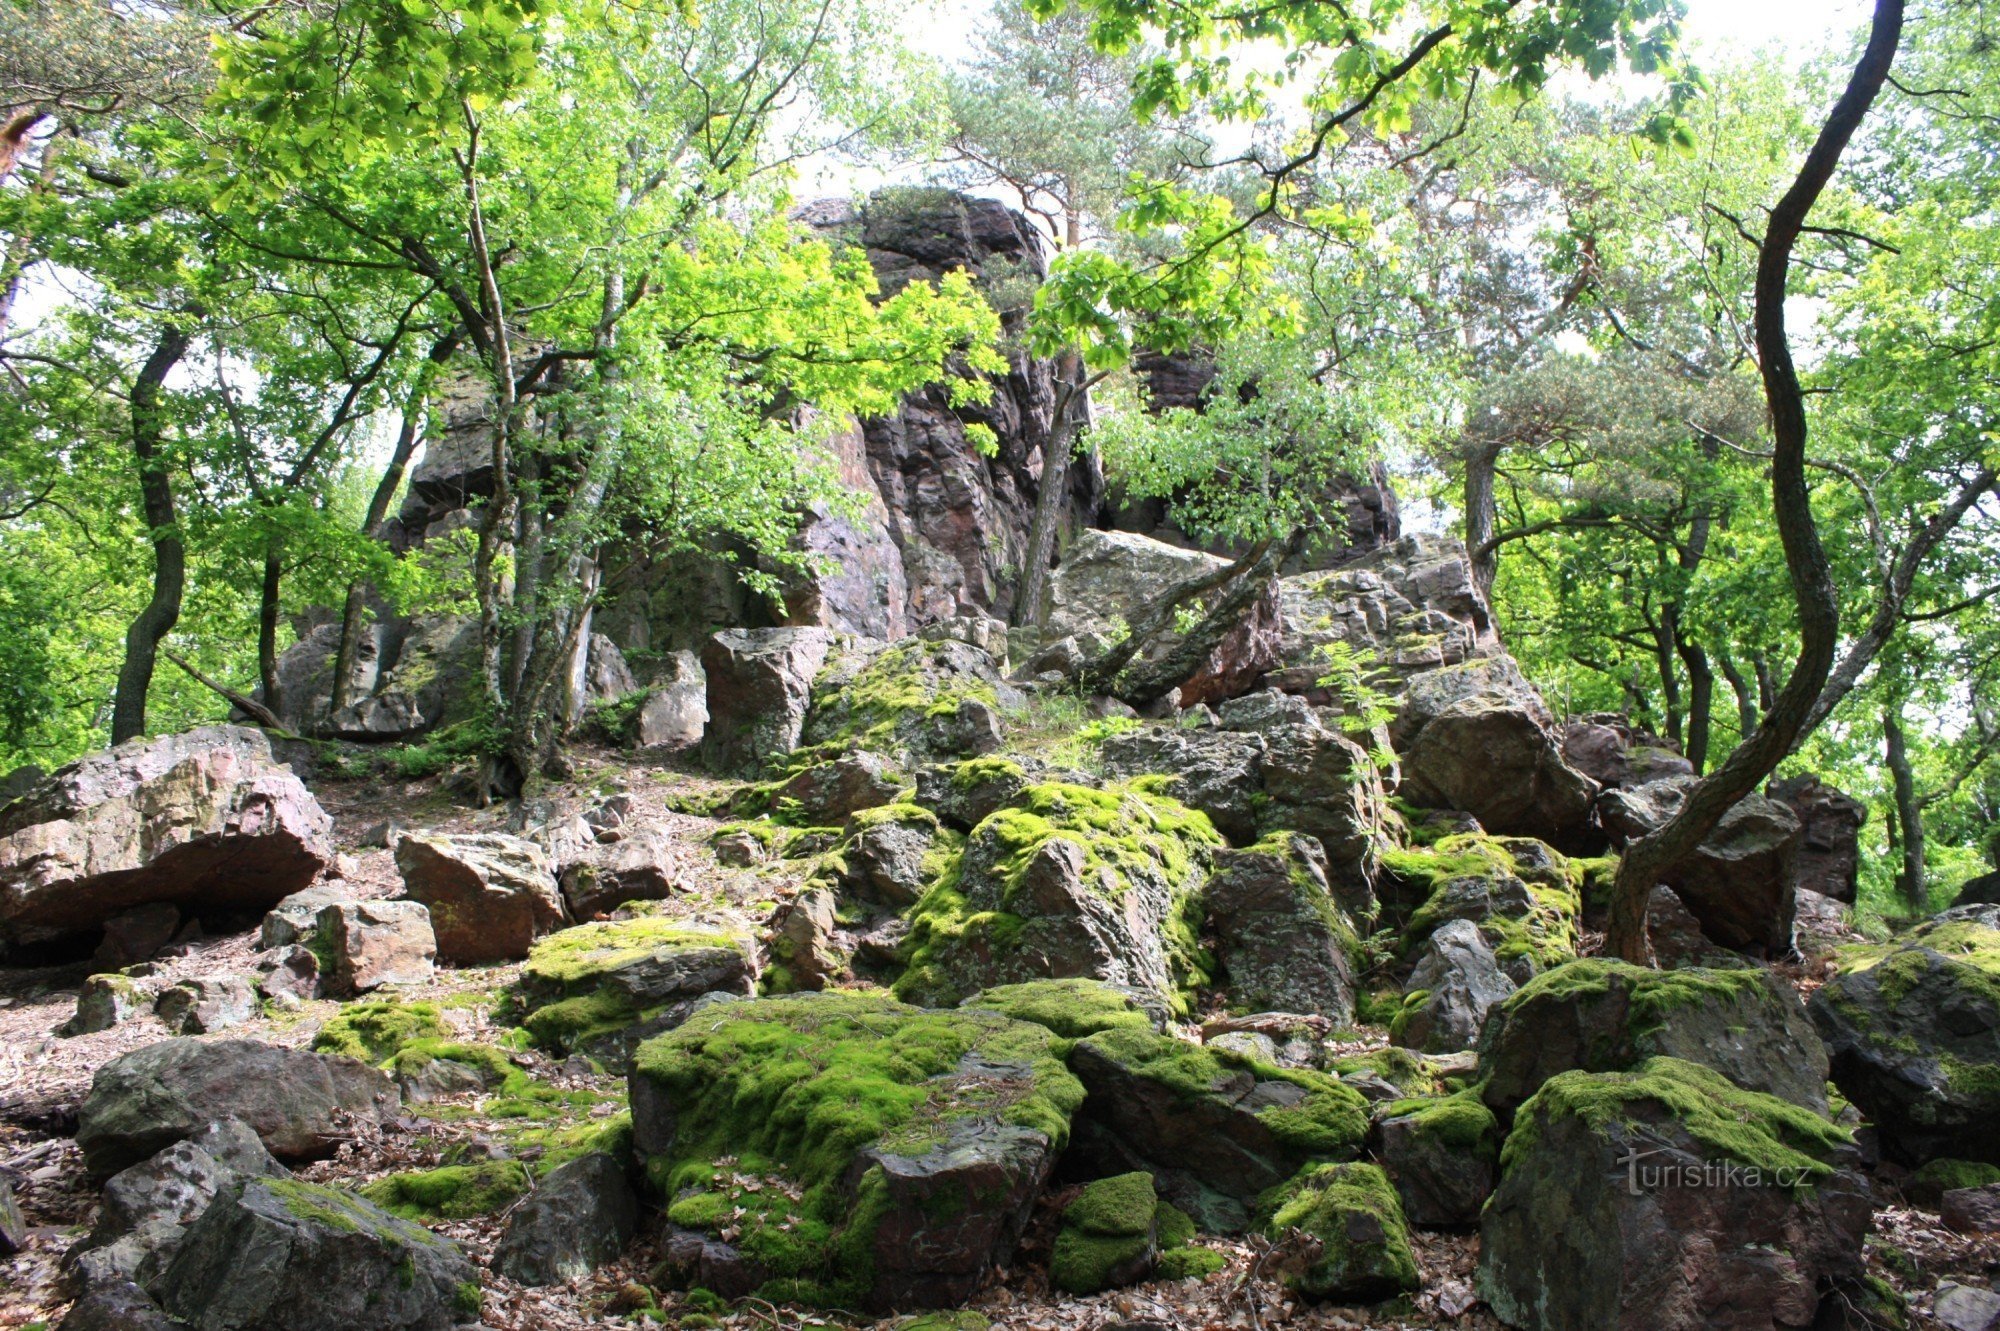 Grote rots - puinhelling met massieve stenen